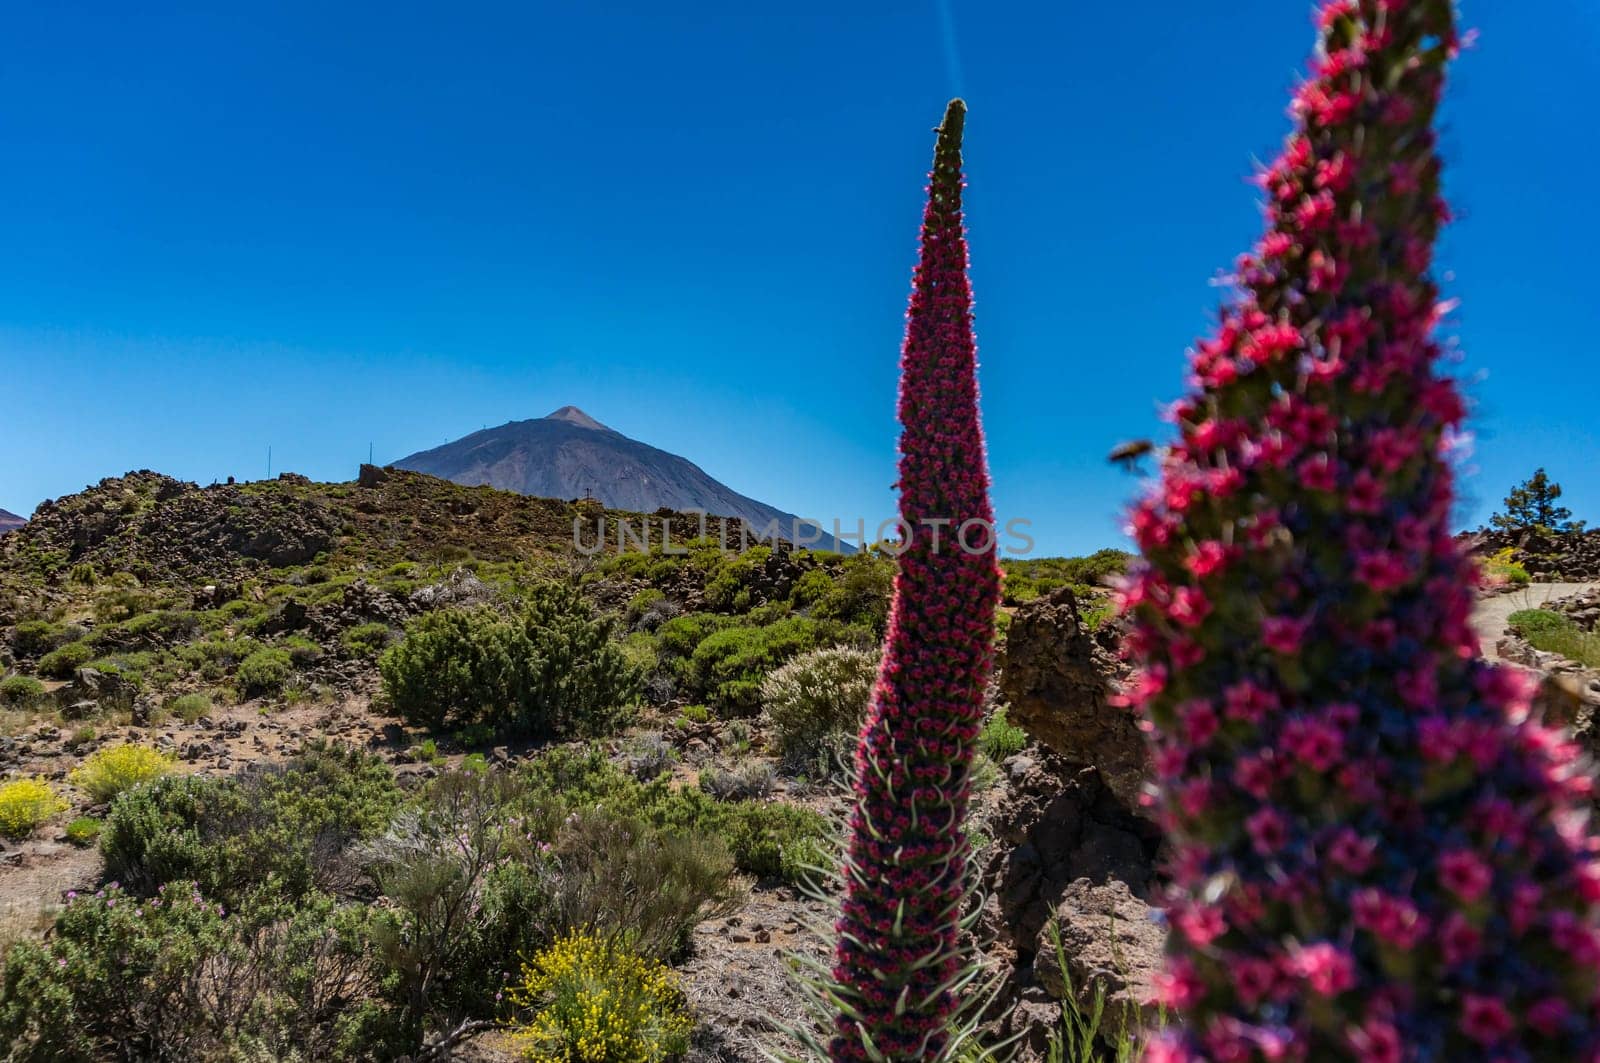 Blurred Tajinaste rojo with the Teide volcano in the background. Red flowers towers between volcanic rocks, shrubs and yellow flowers. Echium wildpretii, tower of jewels, red bugloss, Tenerife bugloss